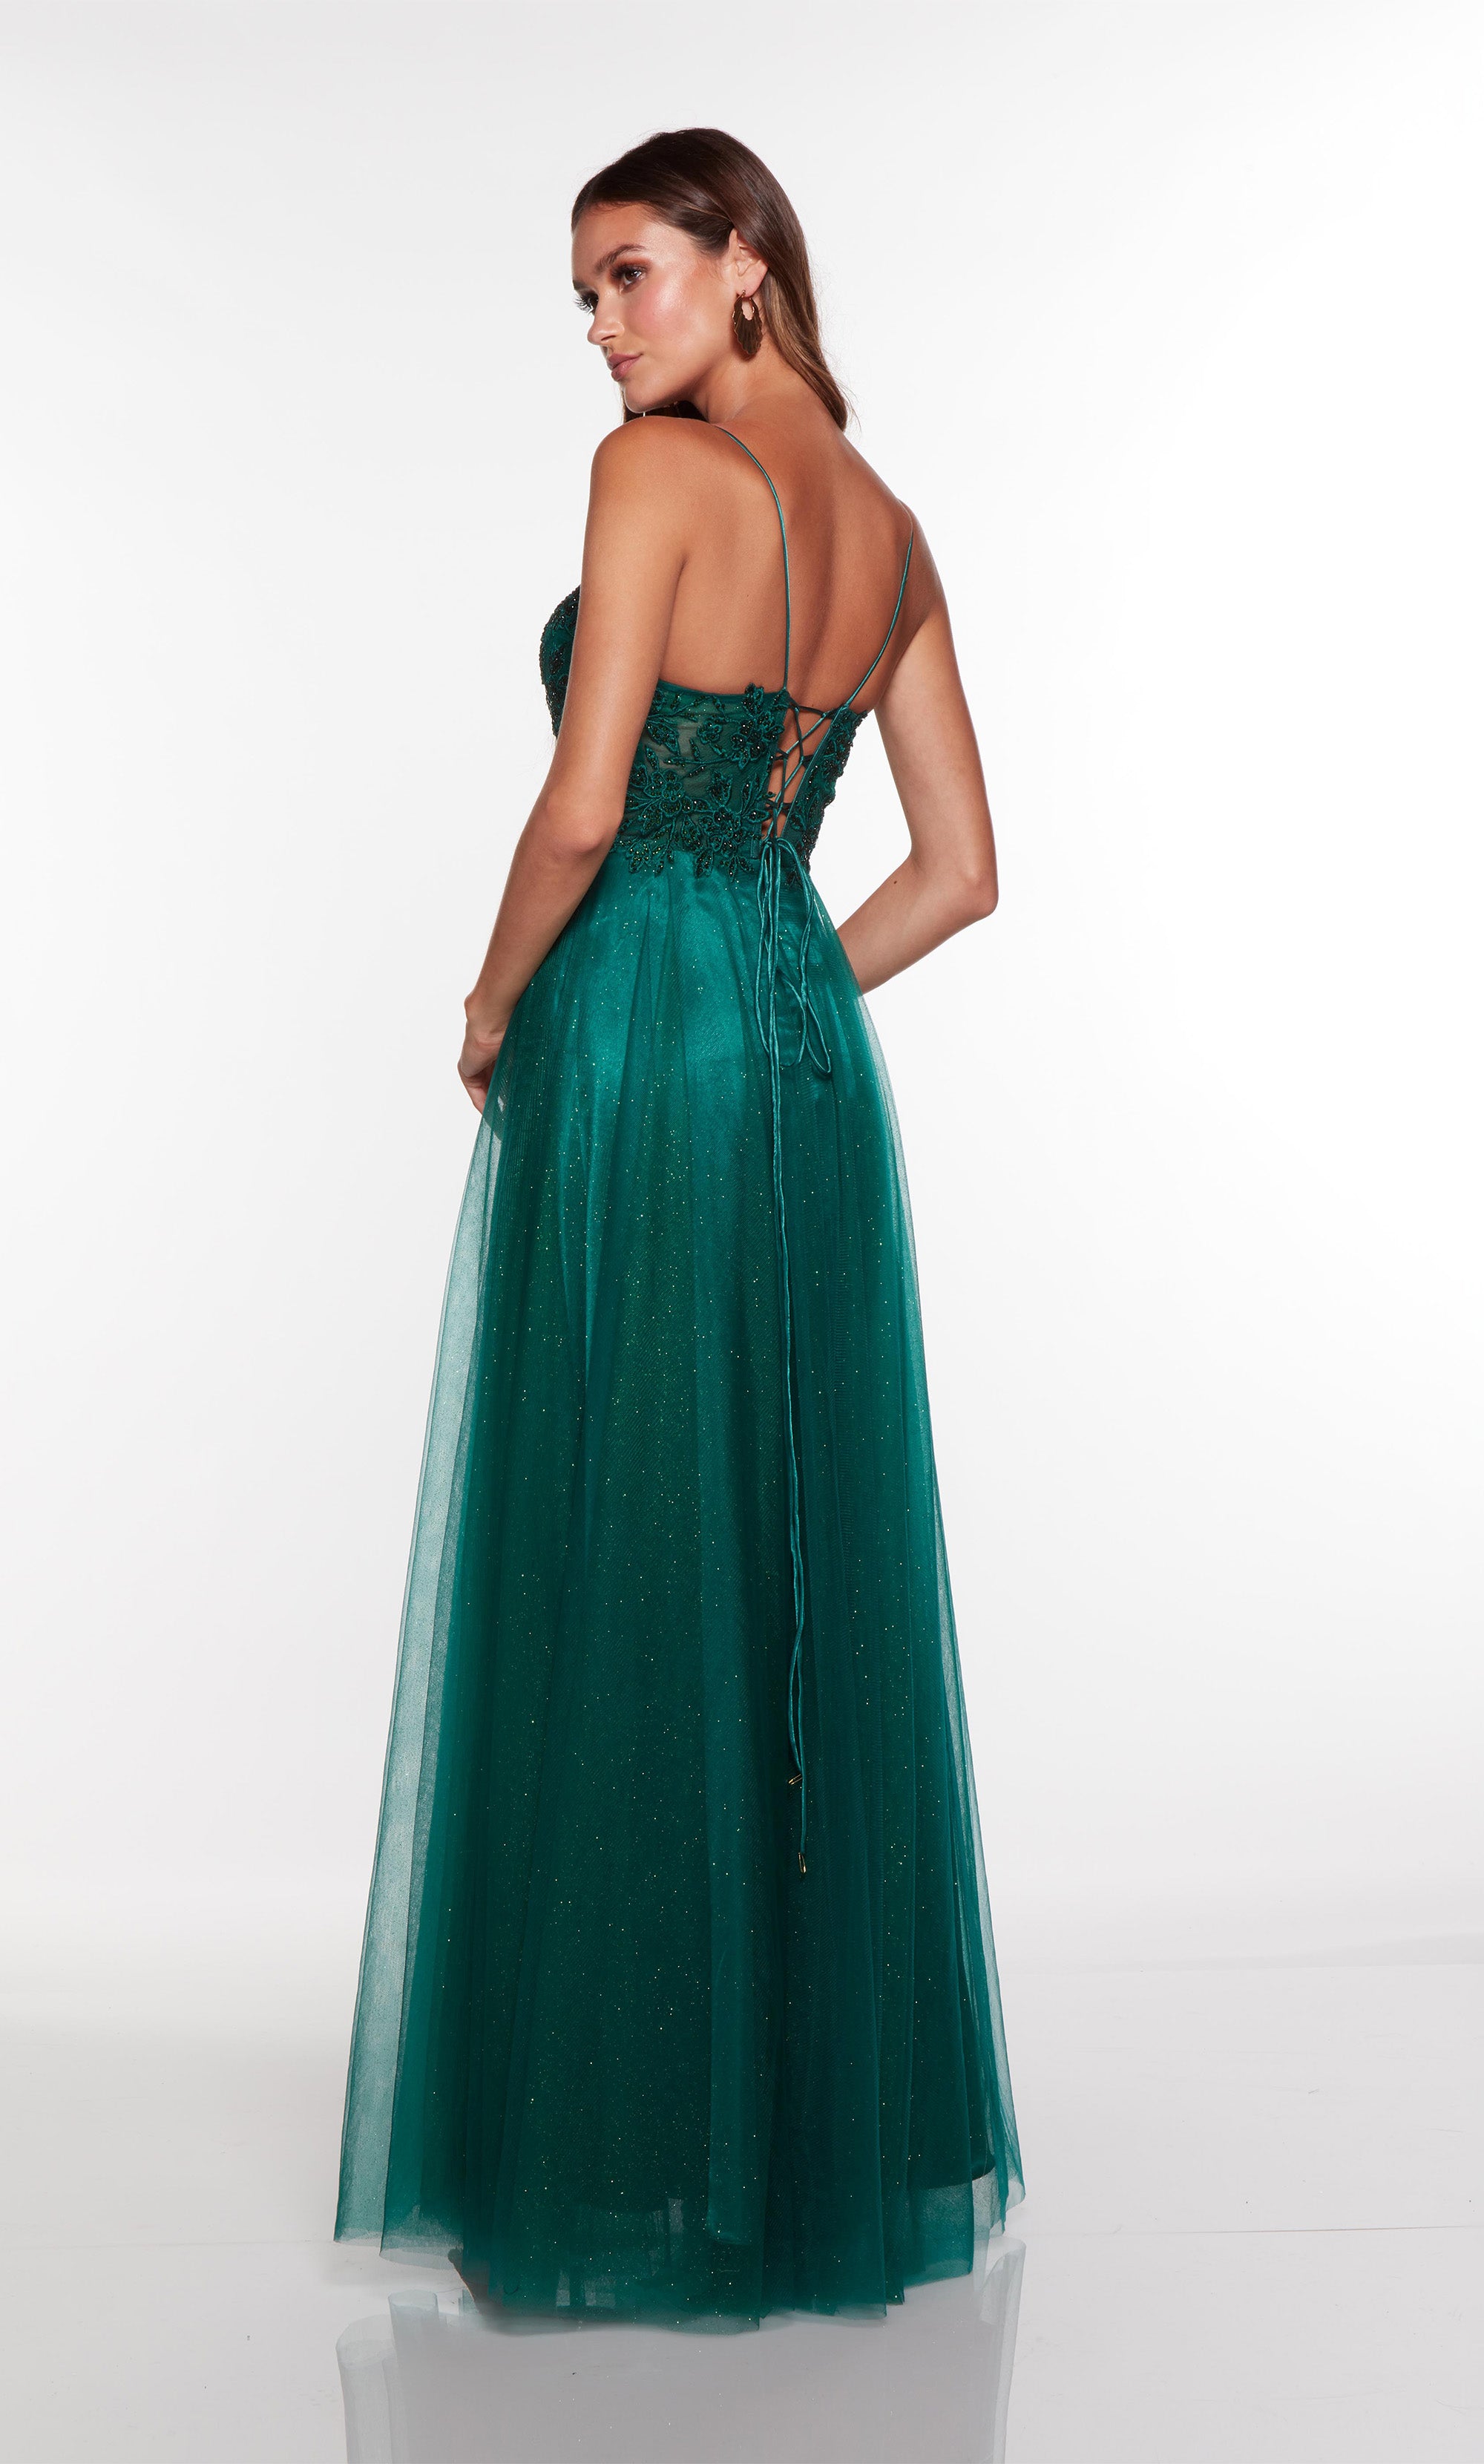 Lace-Corset Dark Green Strapless Long Prom Dress